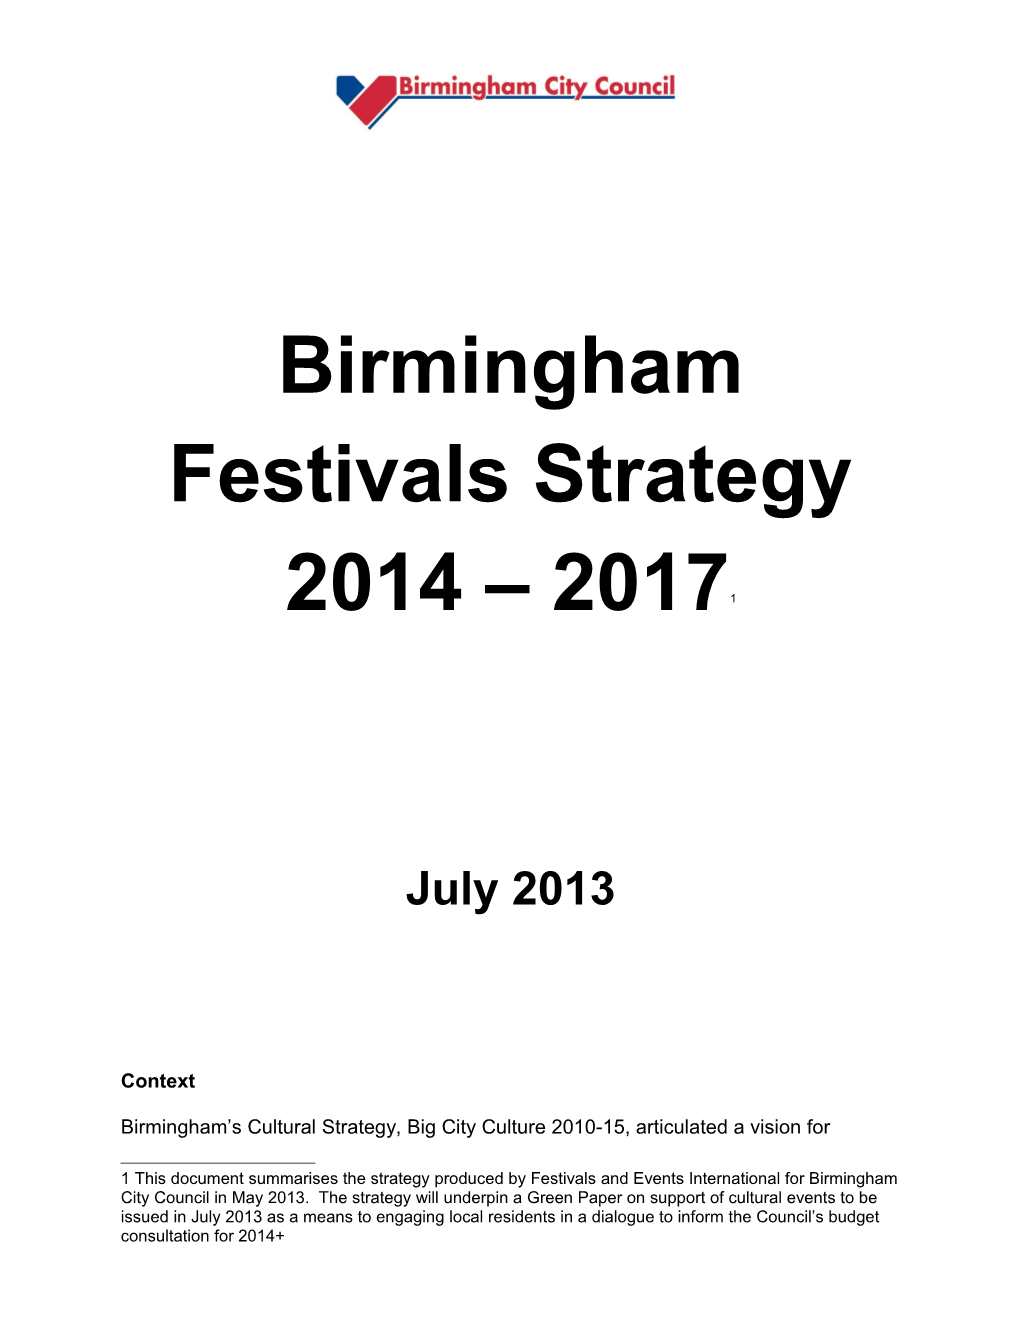 Birmingham Festival Strategy 2014 - 2017